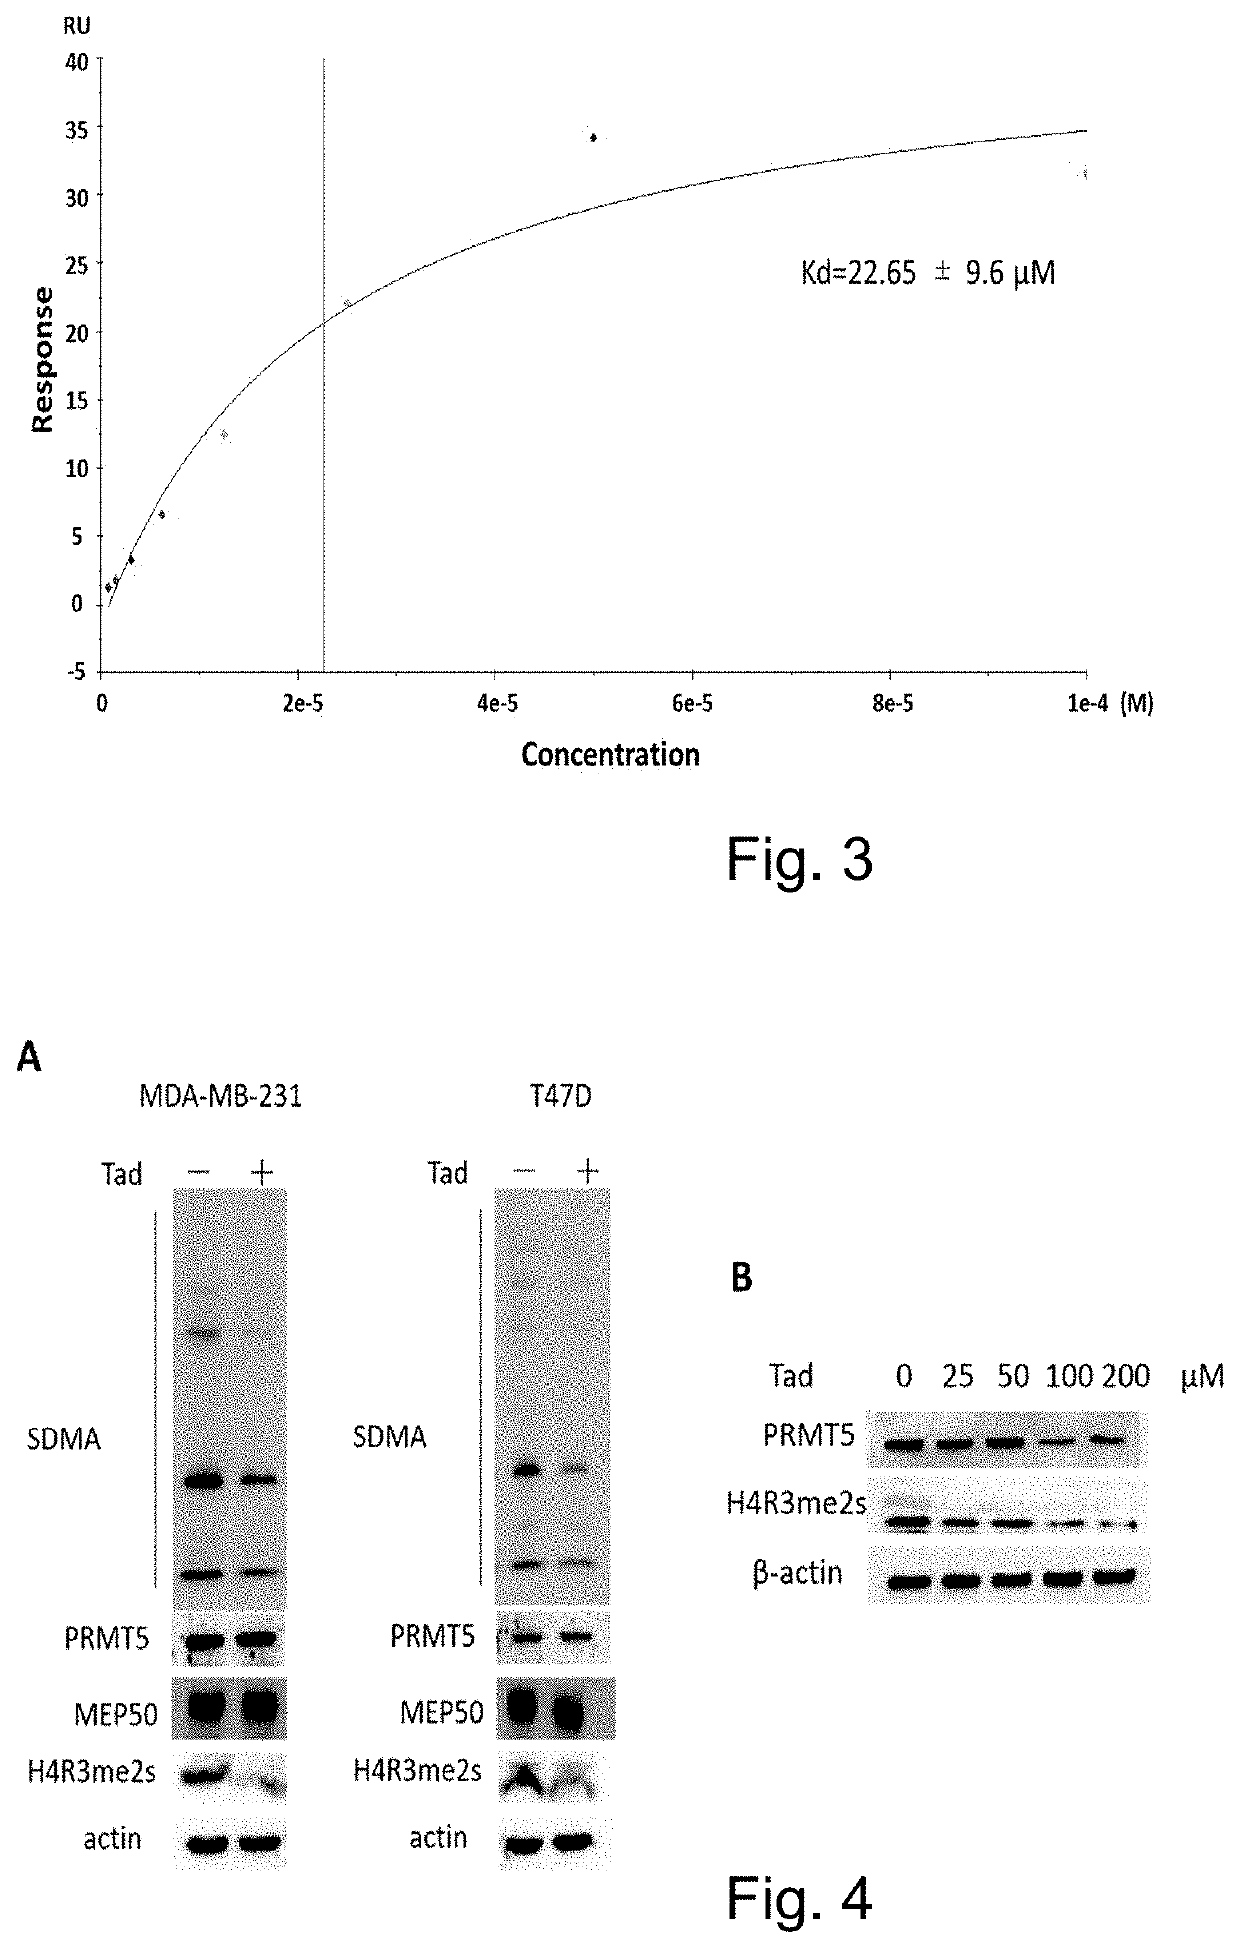 Use of tadalafil as protein arginine methyltransferase (PRMT5) inhibitor